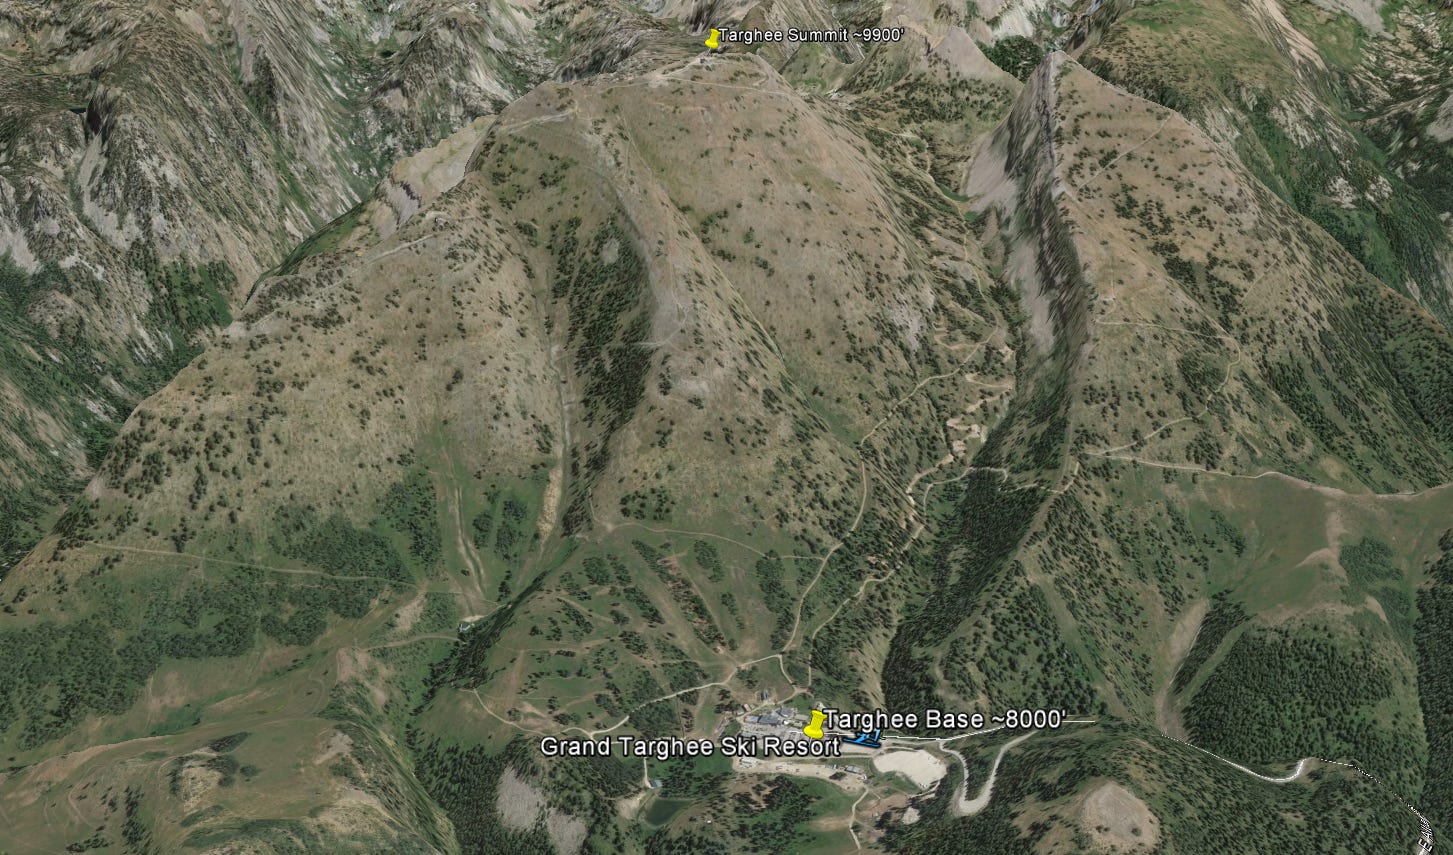 Grand Targhee Ski Resort Google Earth